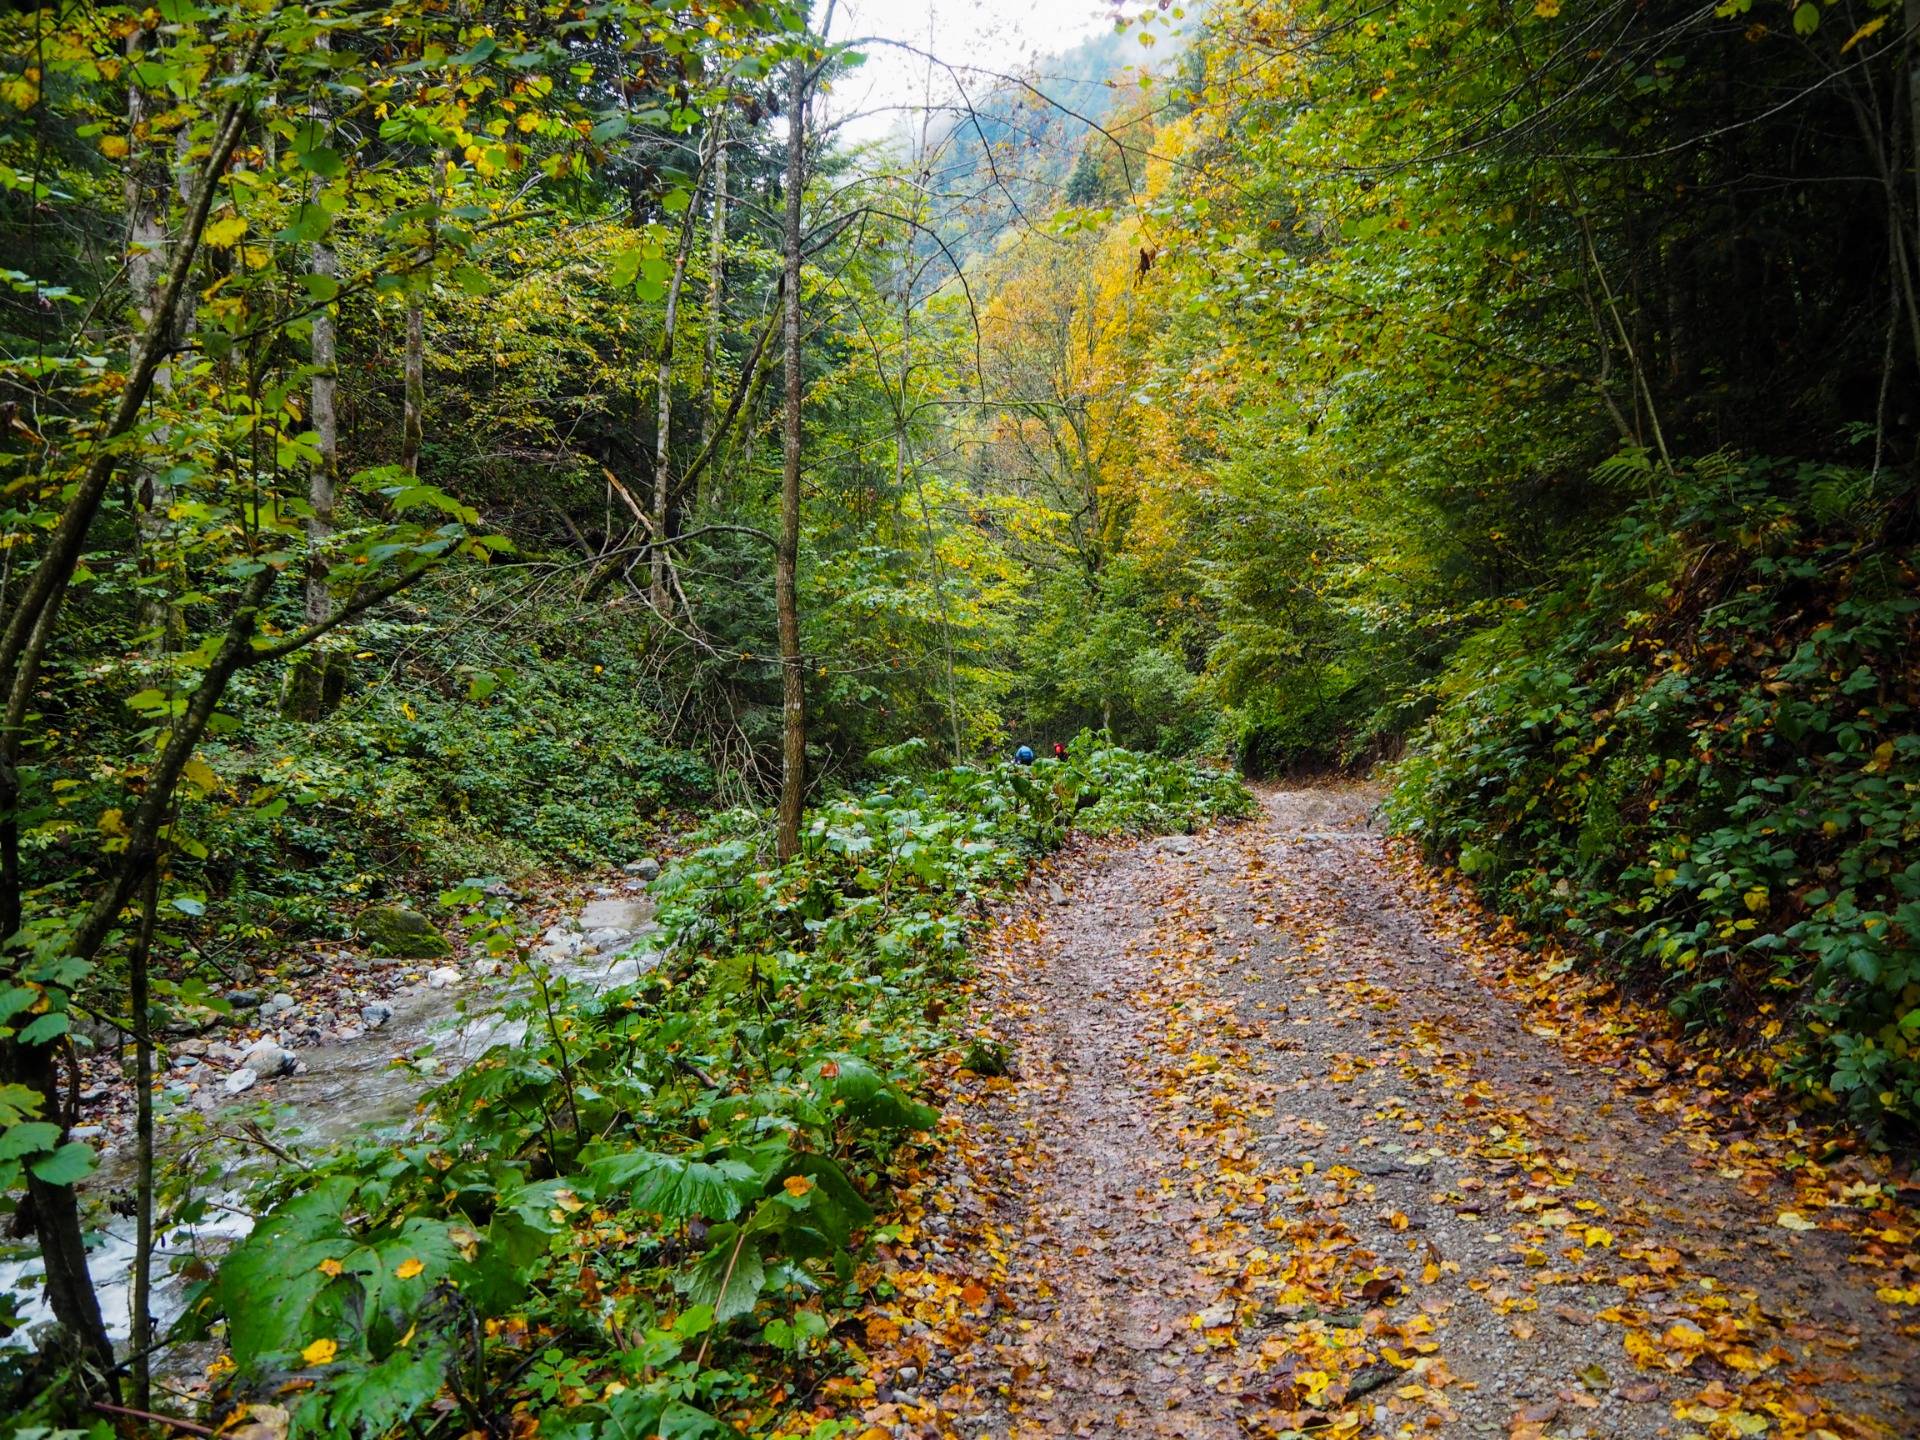 Path through autumn forest in mountains